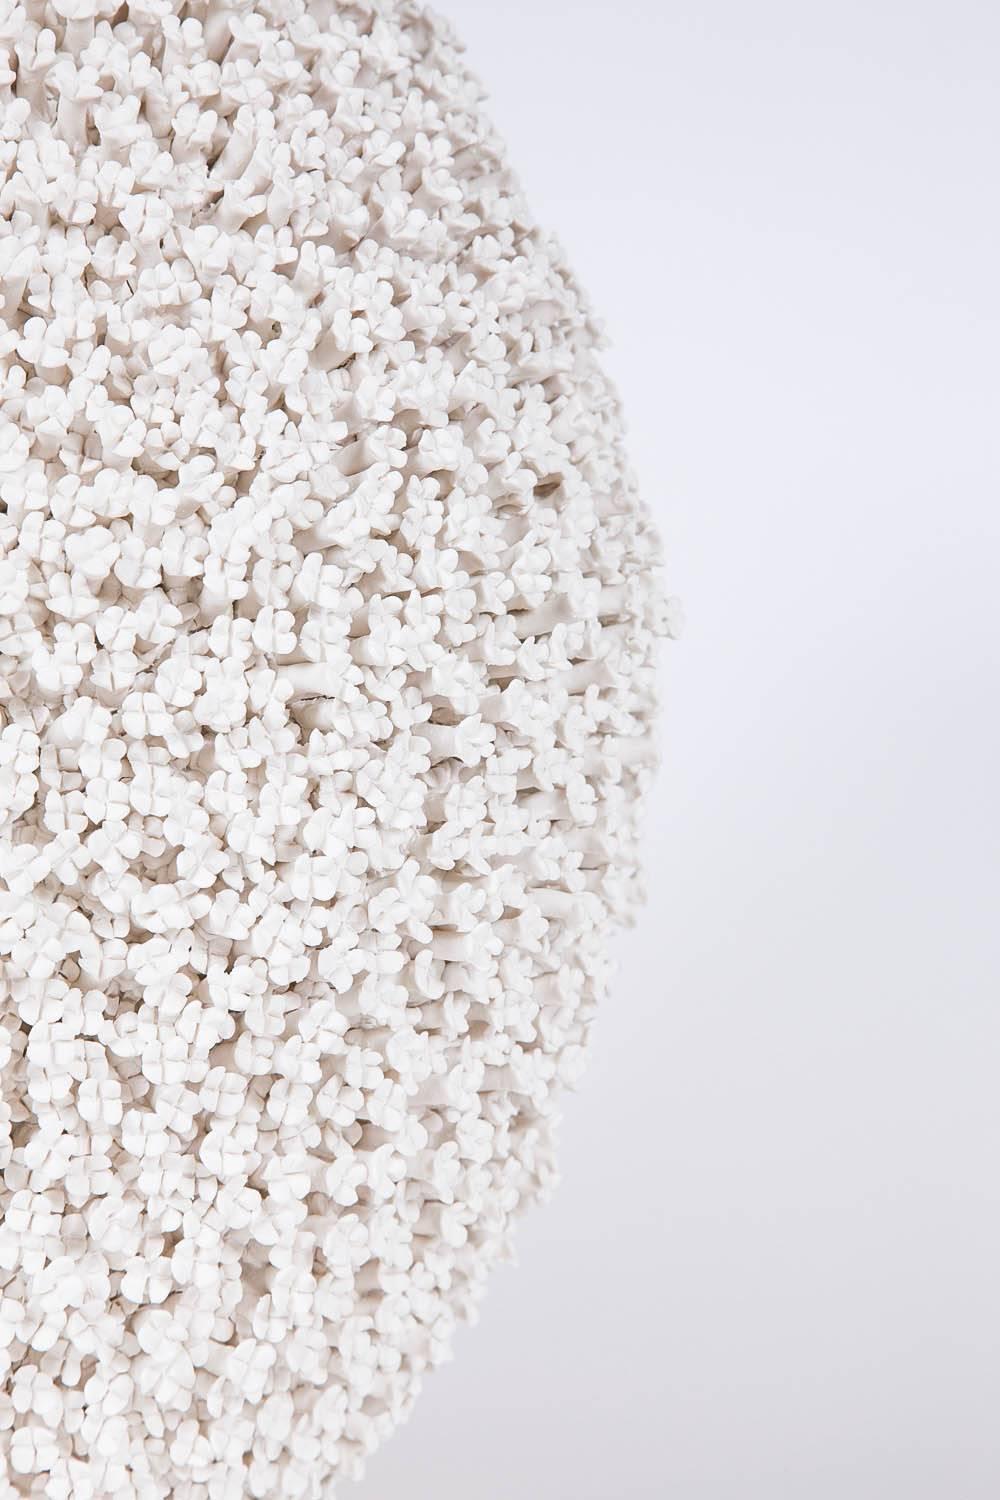 Organic Modern Daphne Vase, a unique floral porcelain sculptural vessel by Vanessa Hogge